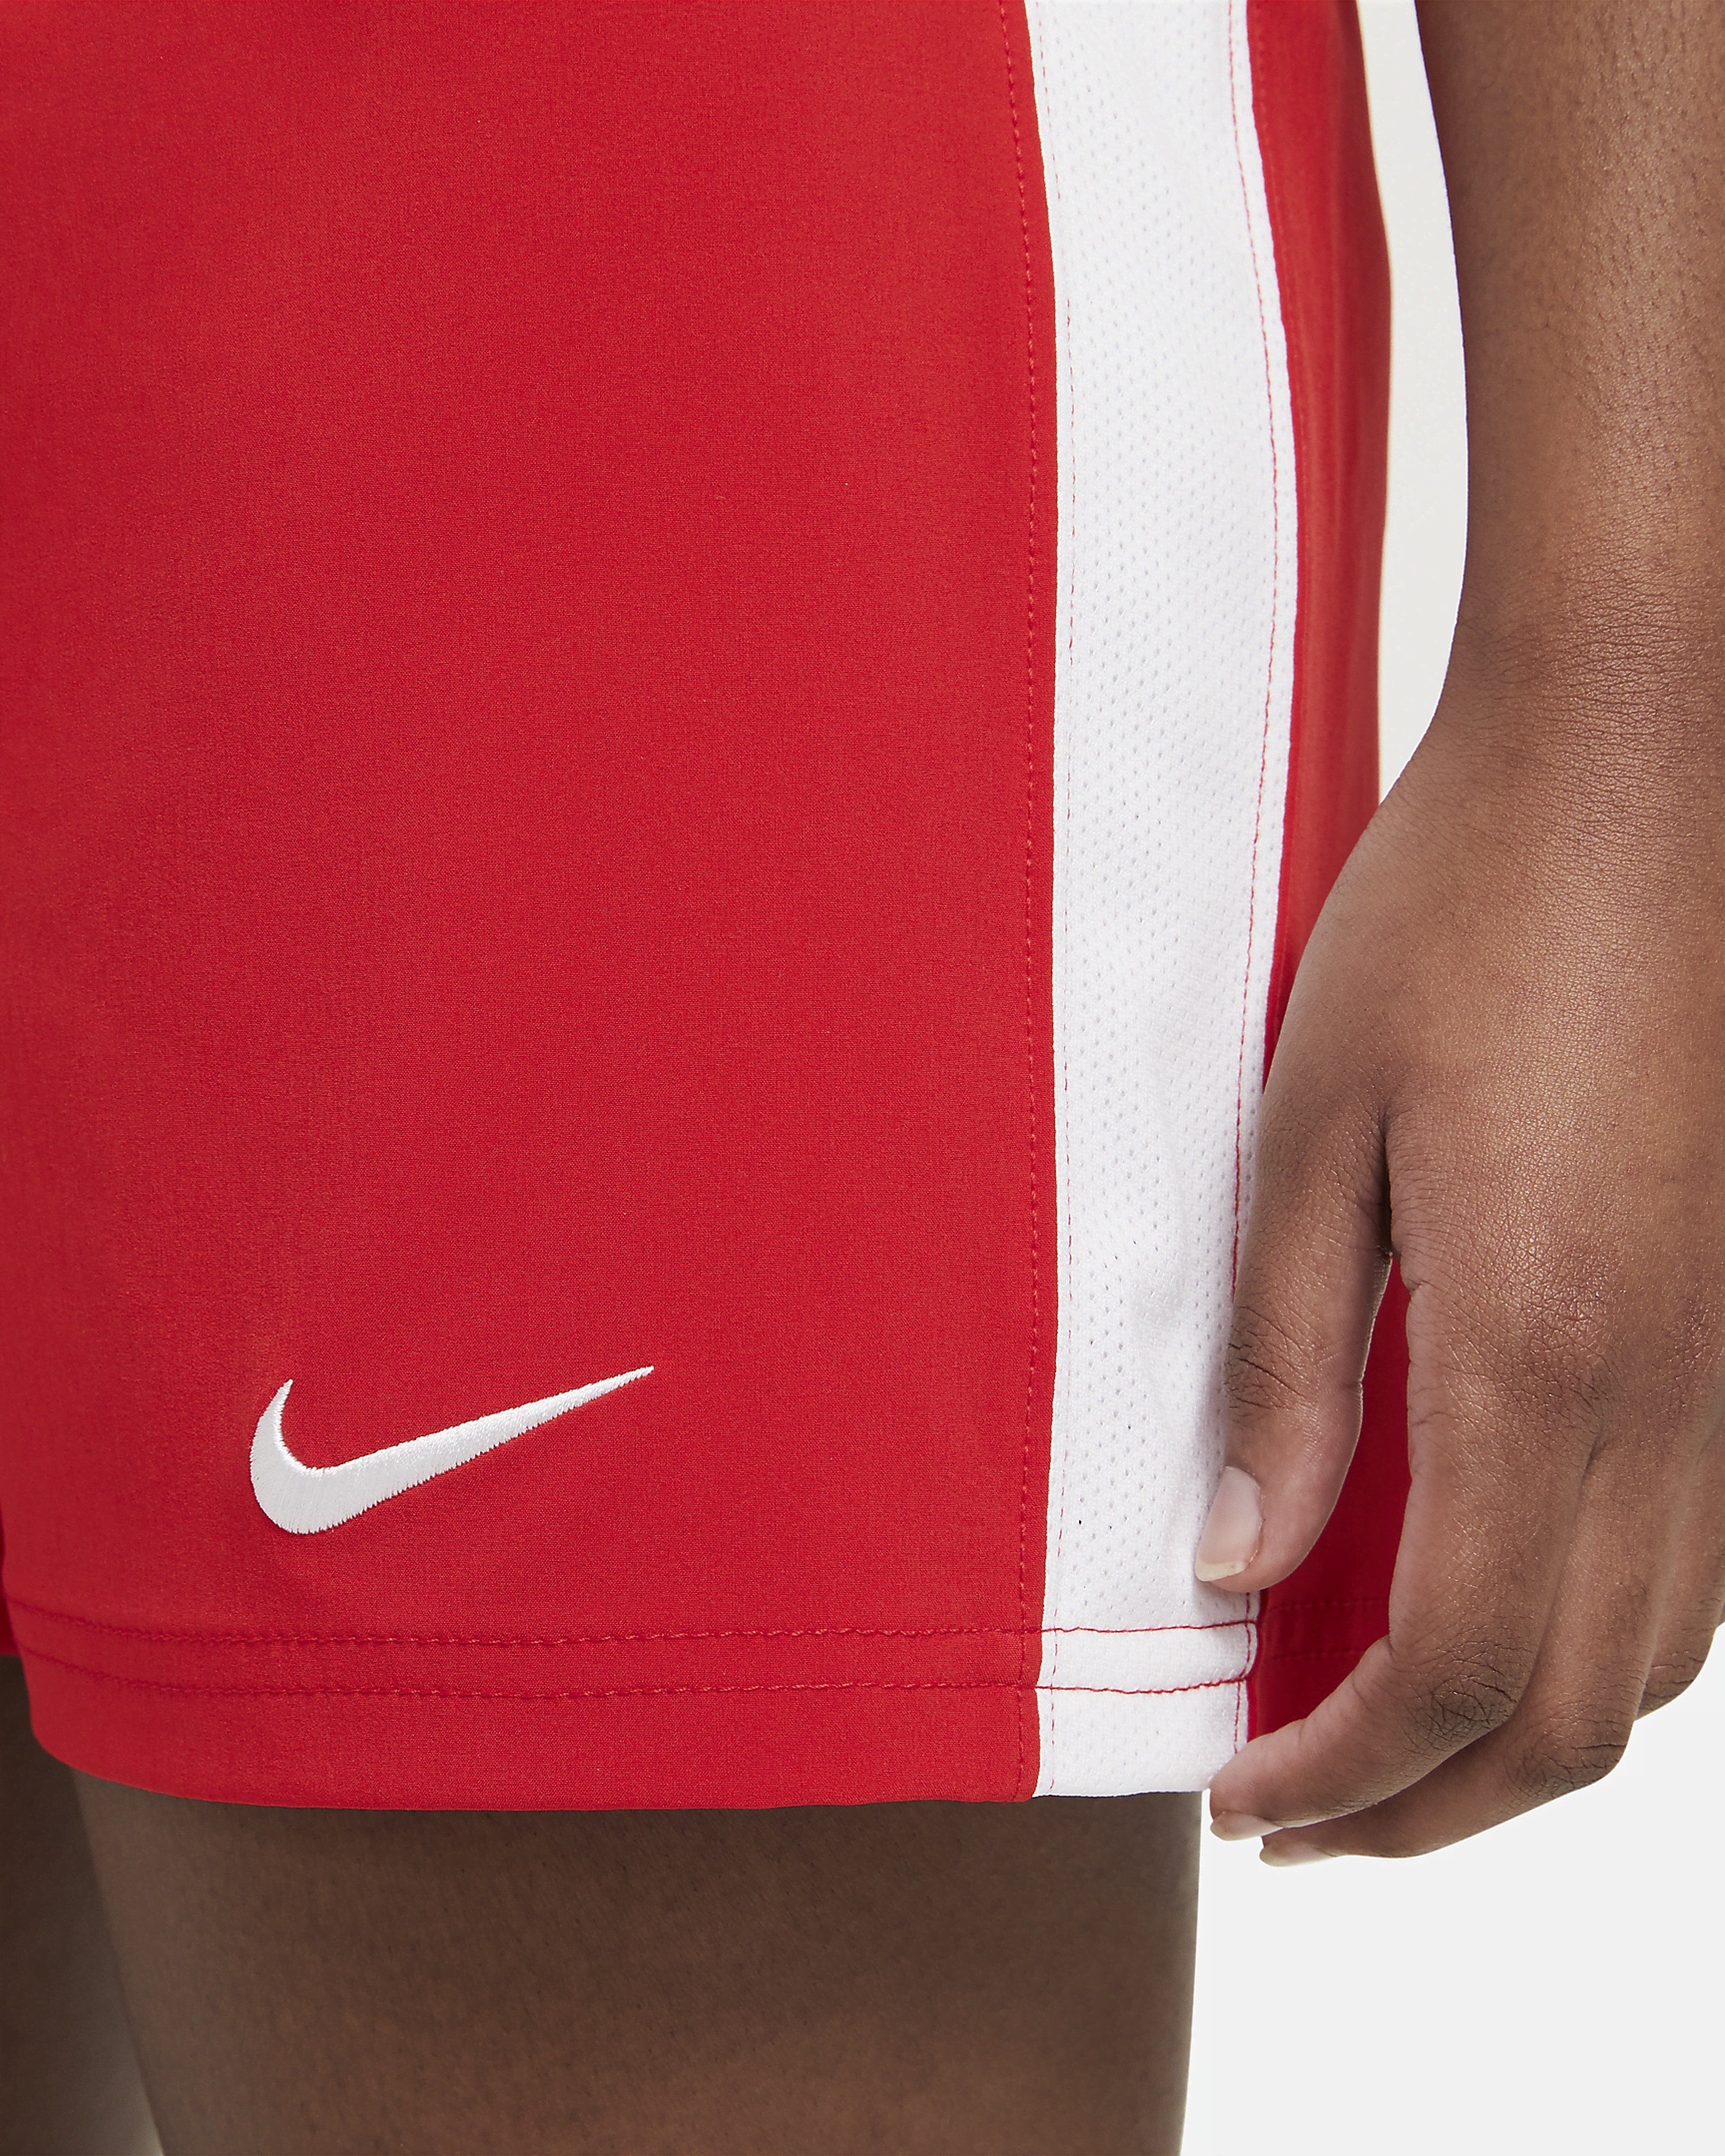 Nike Women's Vapor Flag Football Shorts - 4